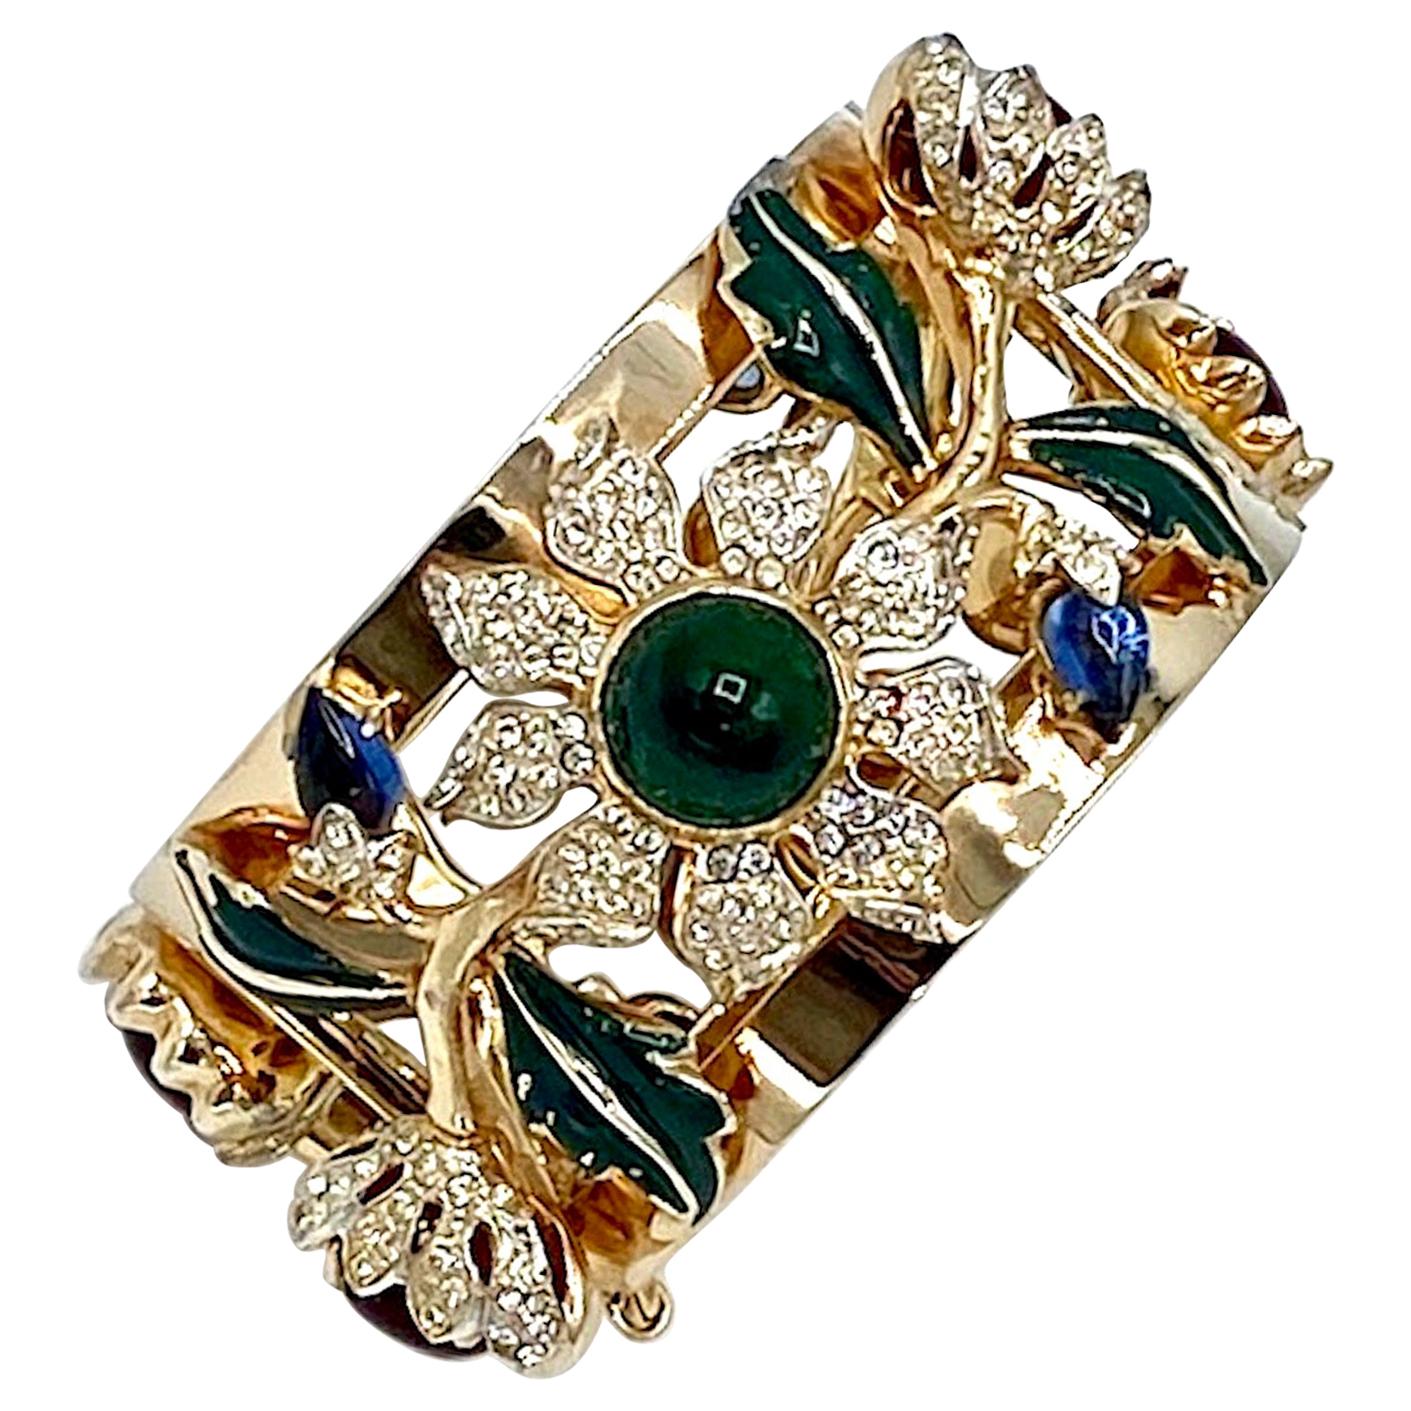 Coro Craft "Carmen Miranda" Camelia Cuff Bracelet from 1939